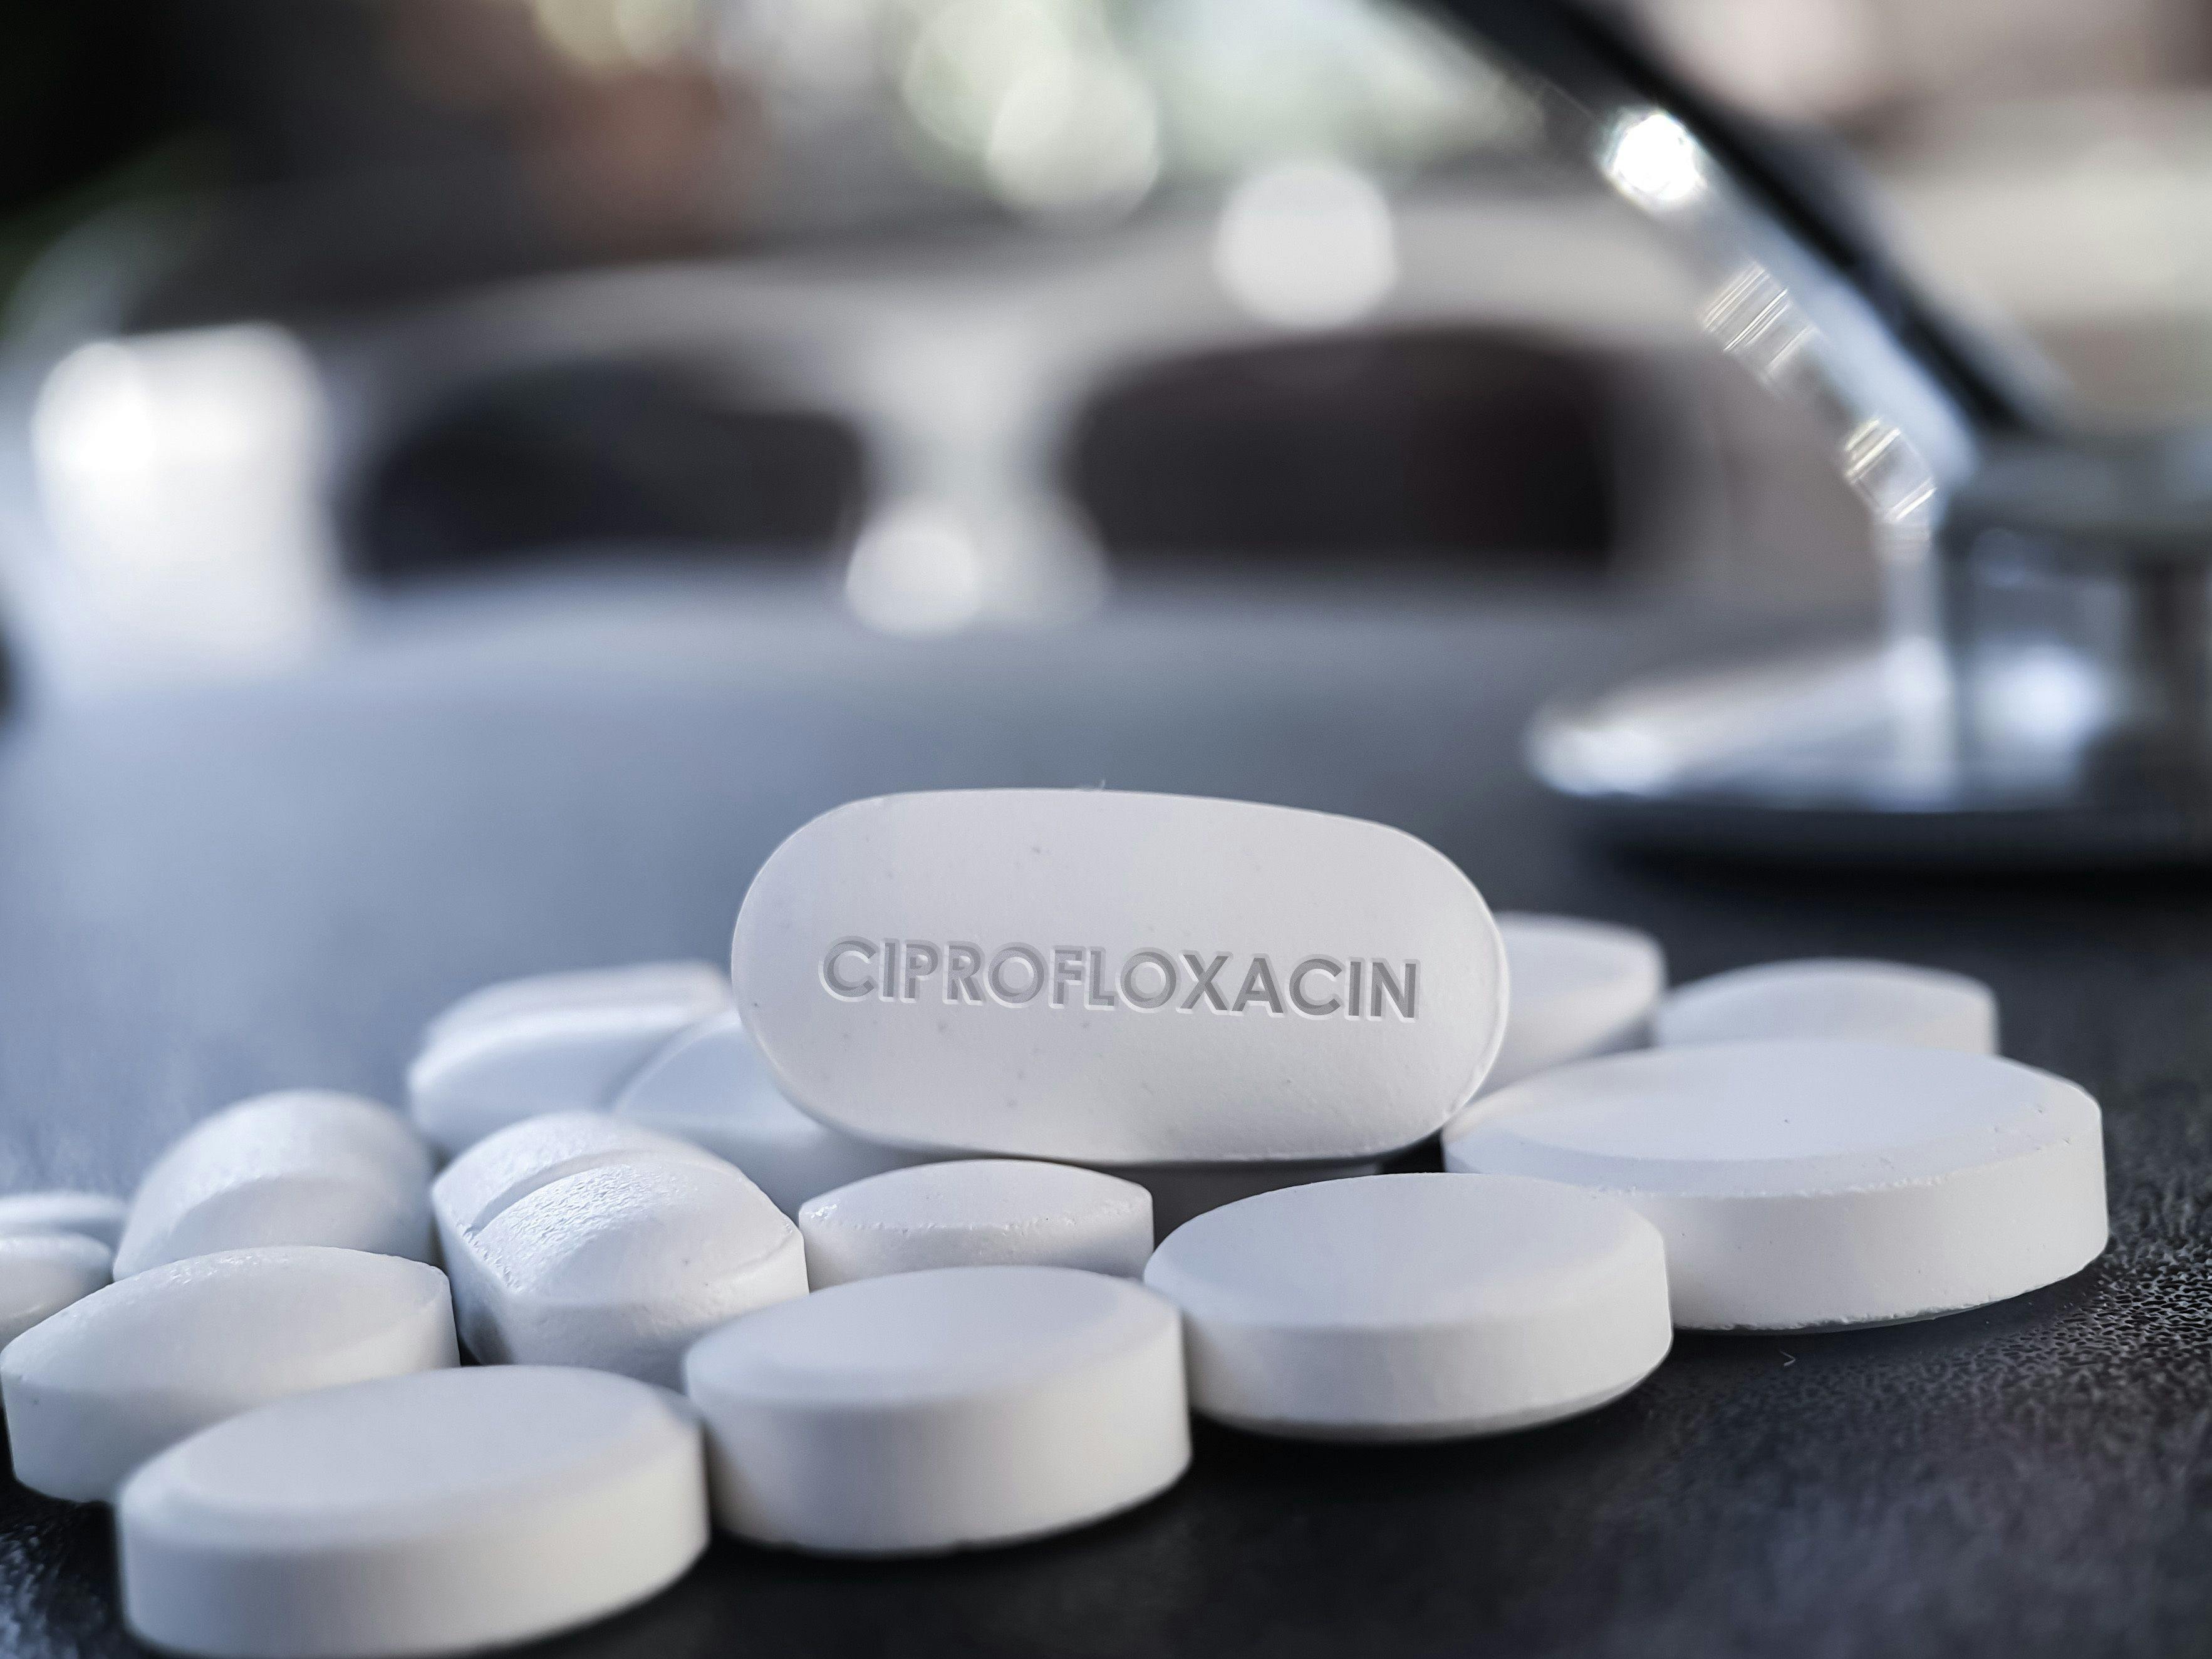 Ciprofloxacin antiobiotic white pill medication | Image Credit: © Soni's - stock.adobe.com